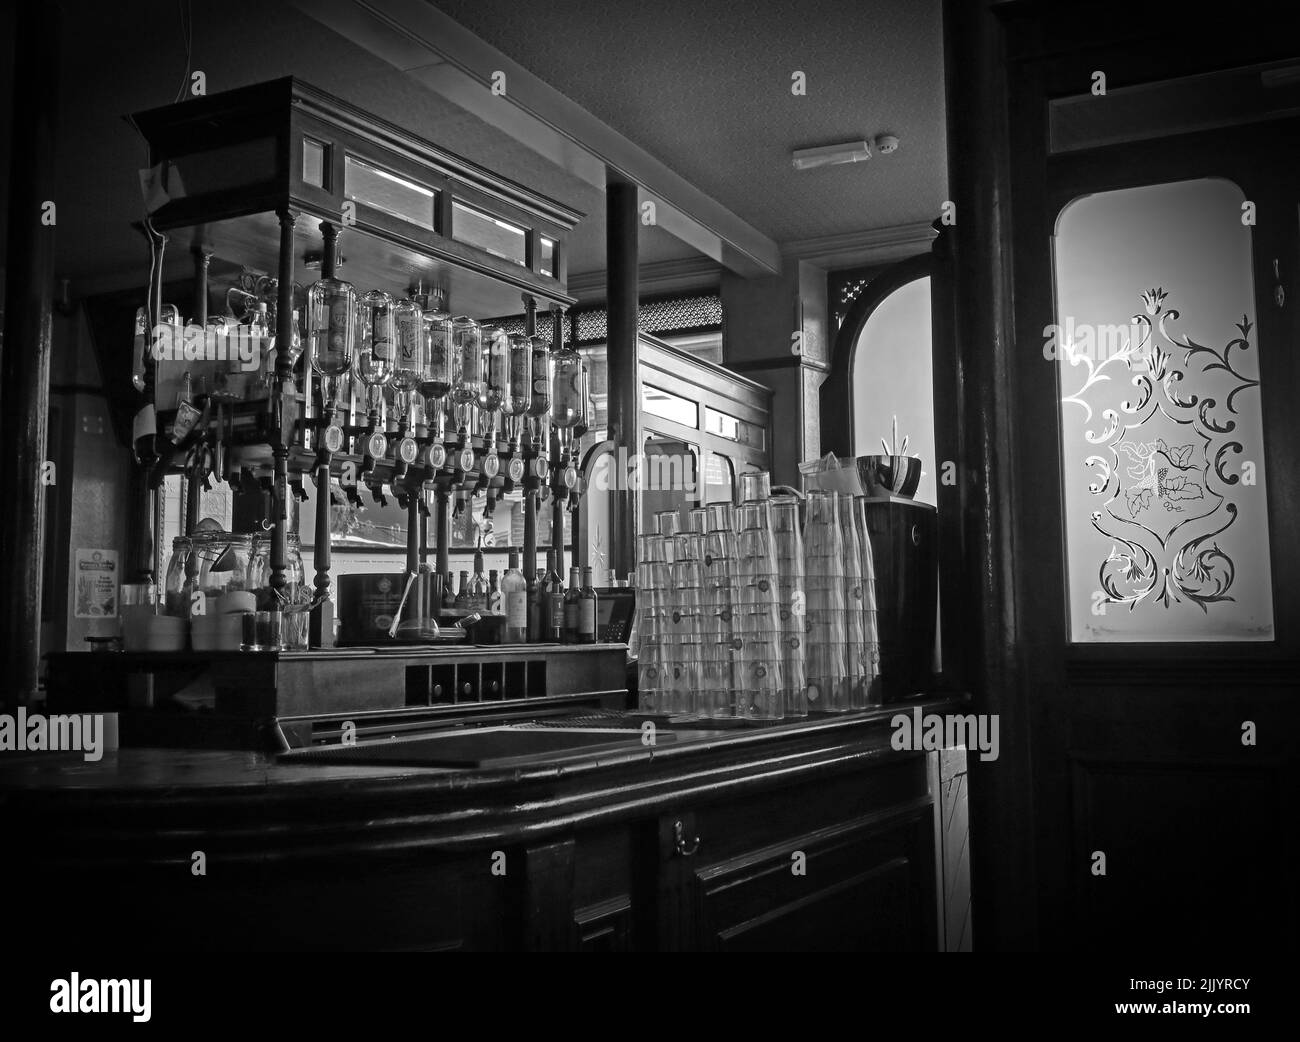 The White Horse Sam Smiths pub, Soho, 45 Rupert Street Soho London, England, UK,  W1D 7PJ - in monochrome Stock Photo